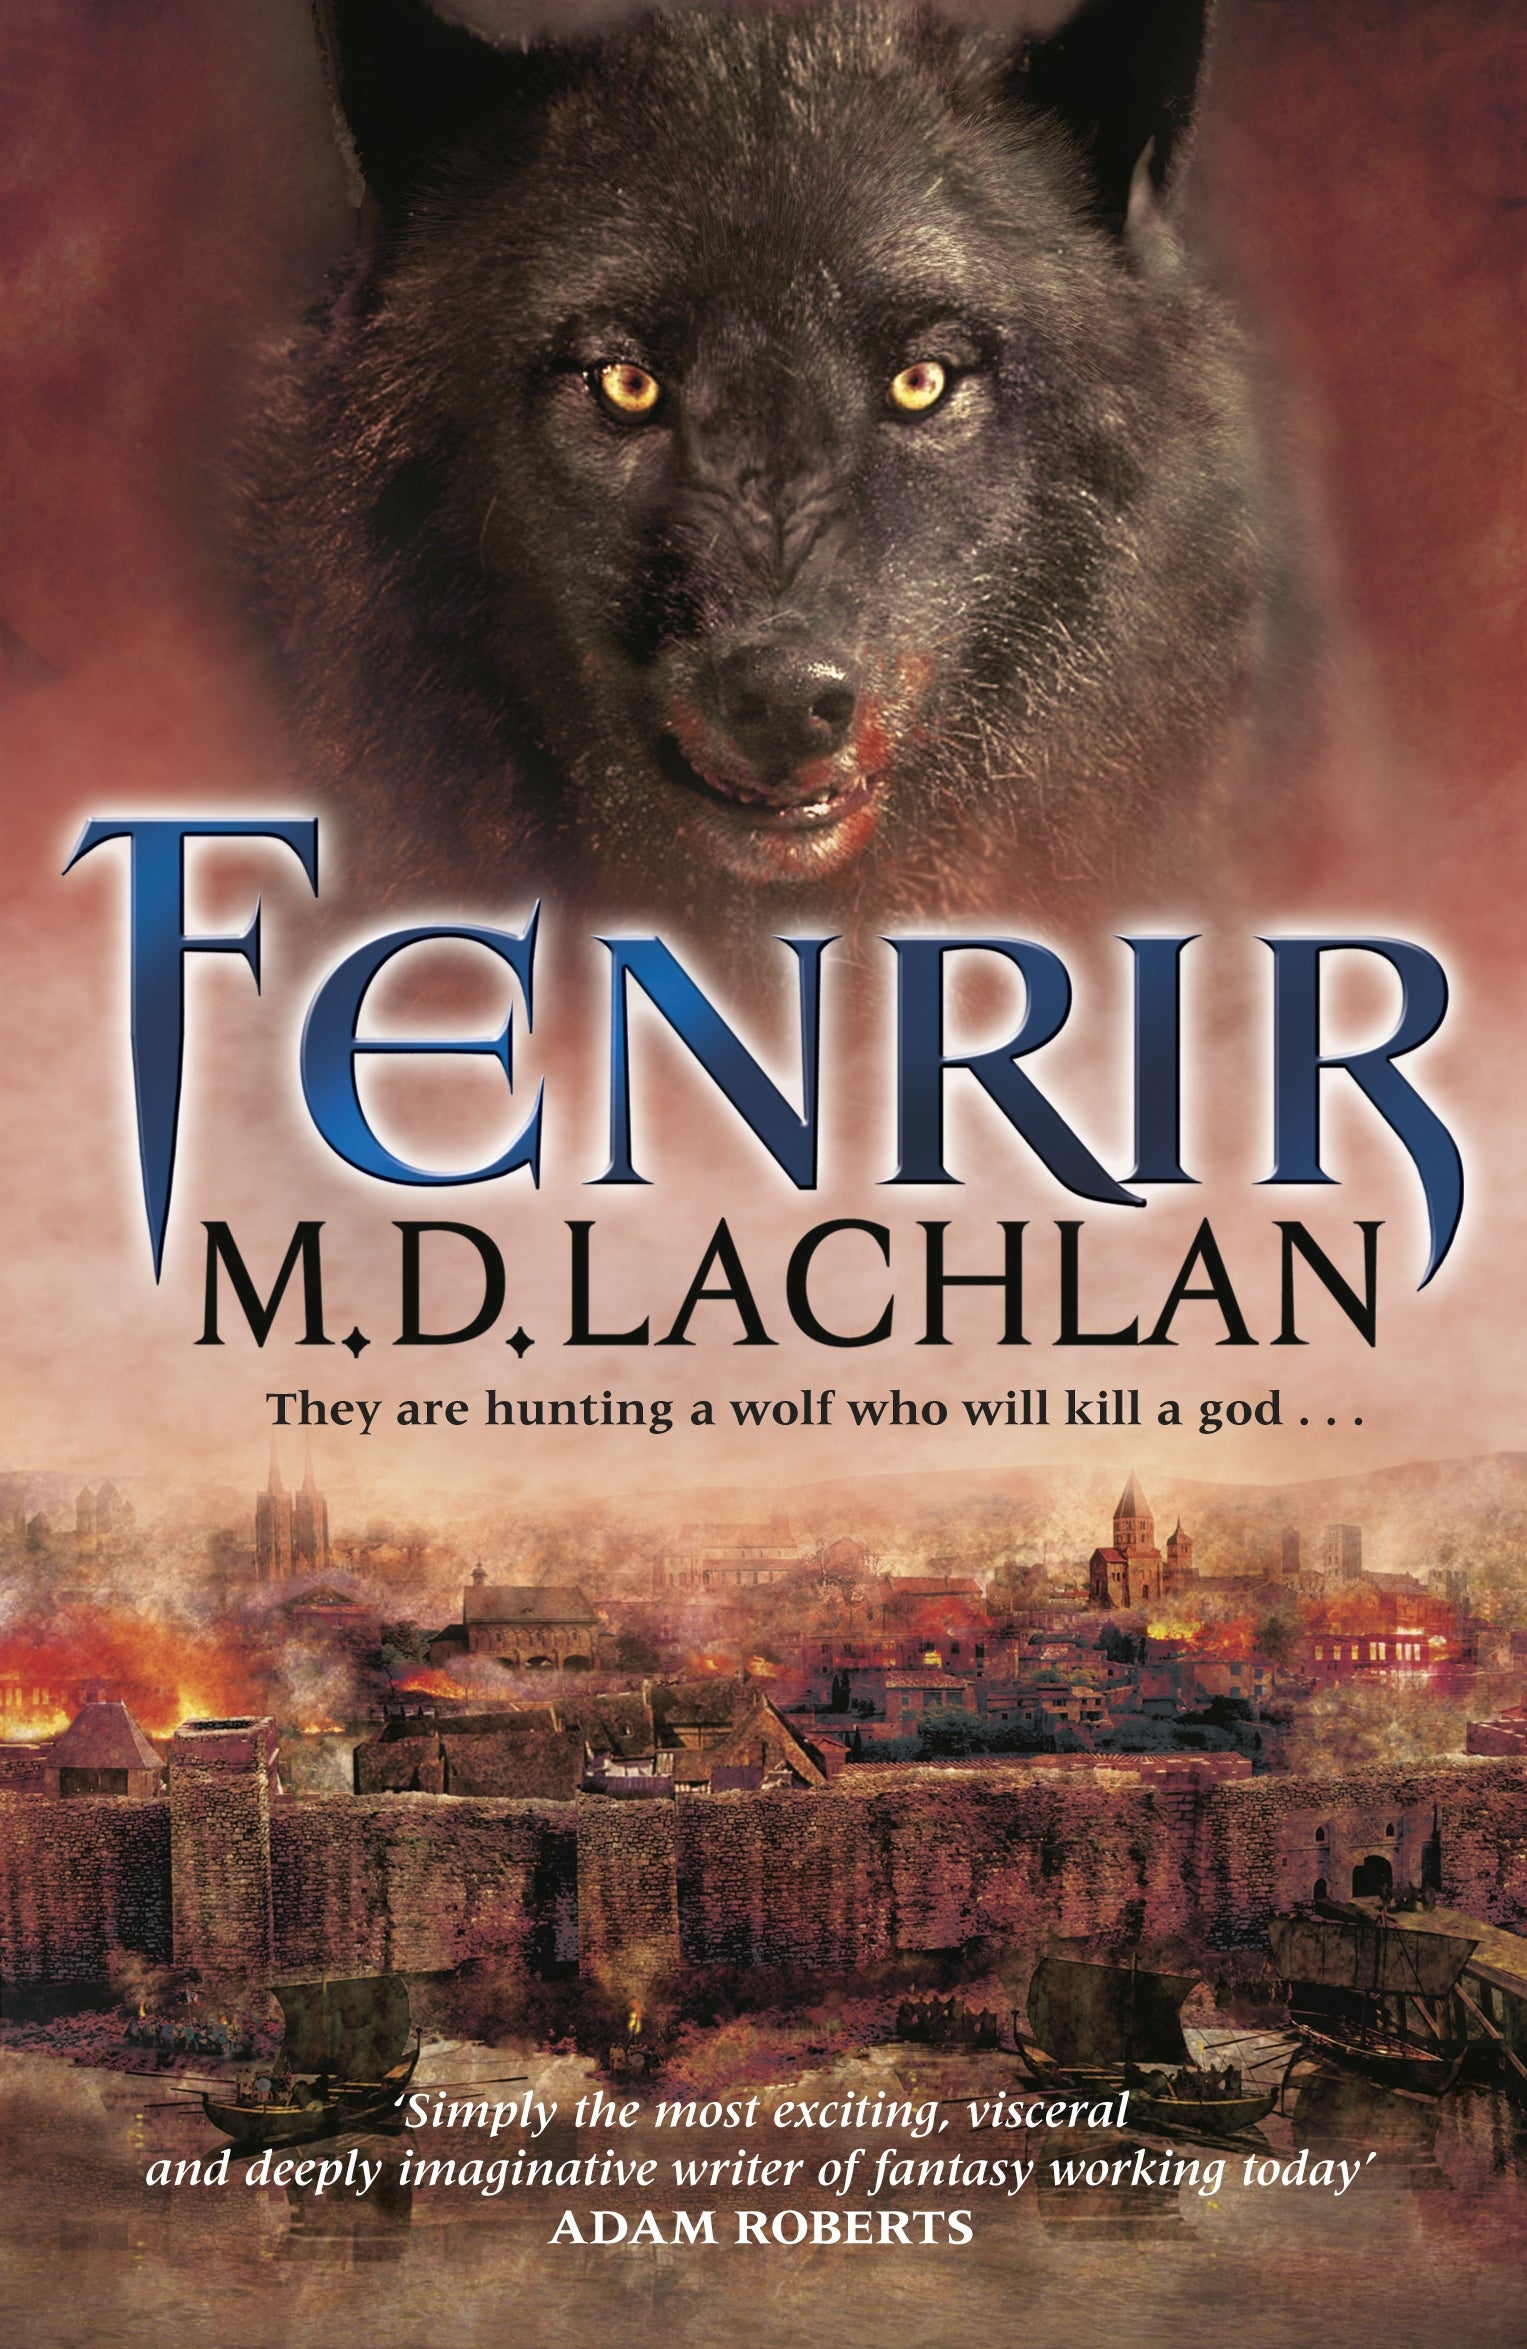 Fenrir by M.D. Lachlan